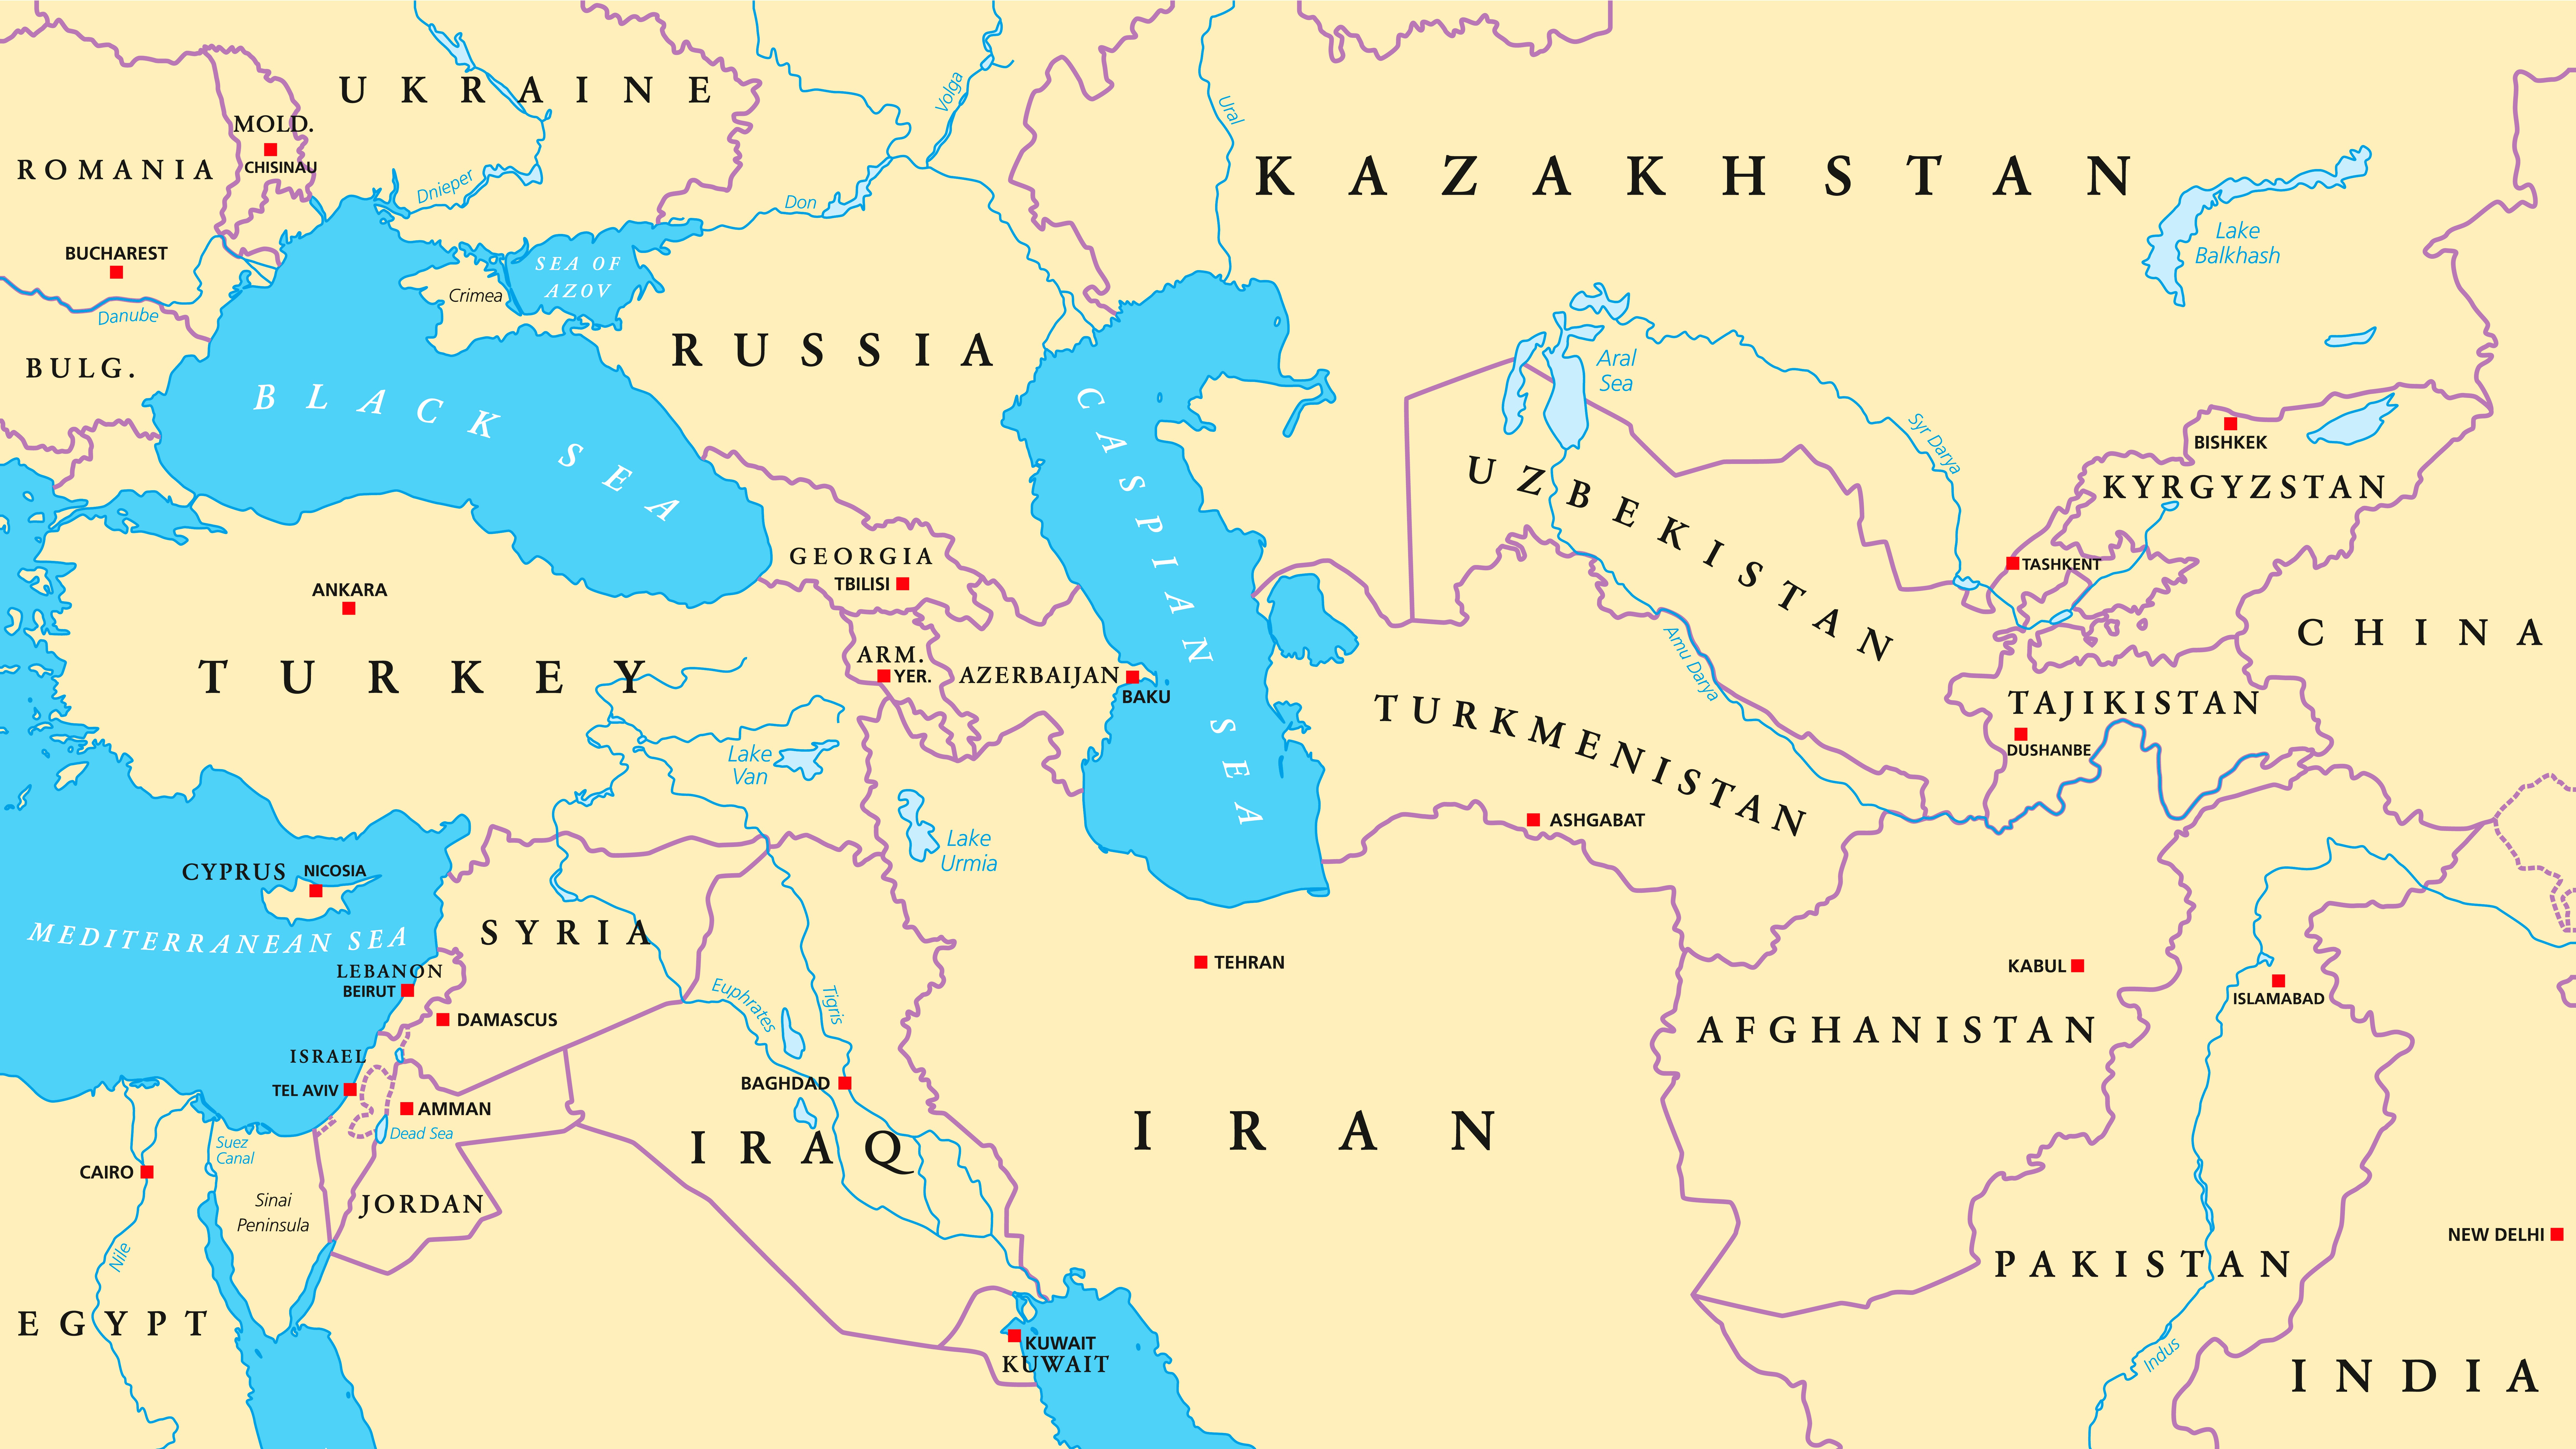 Capacity for Caspian Sea Crossing Increased to 7 7